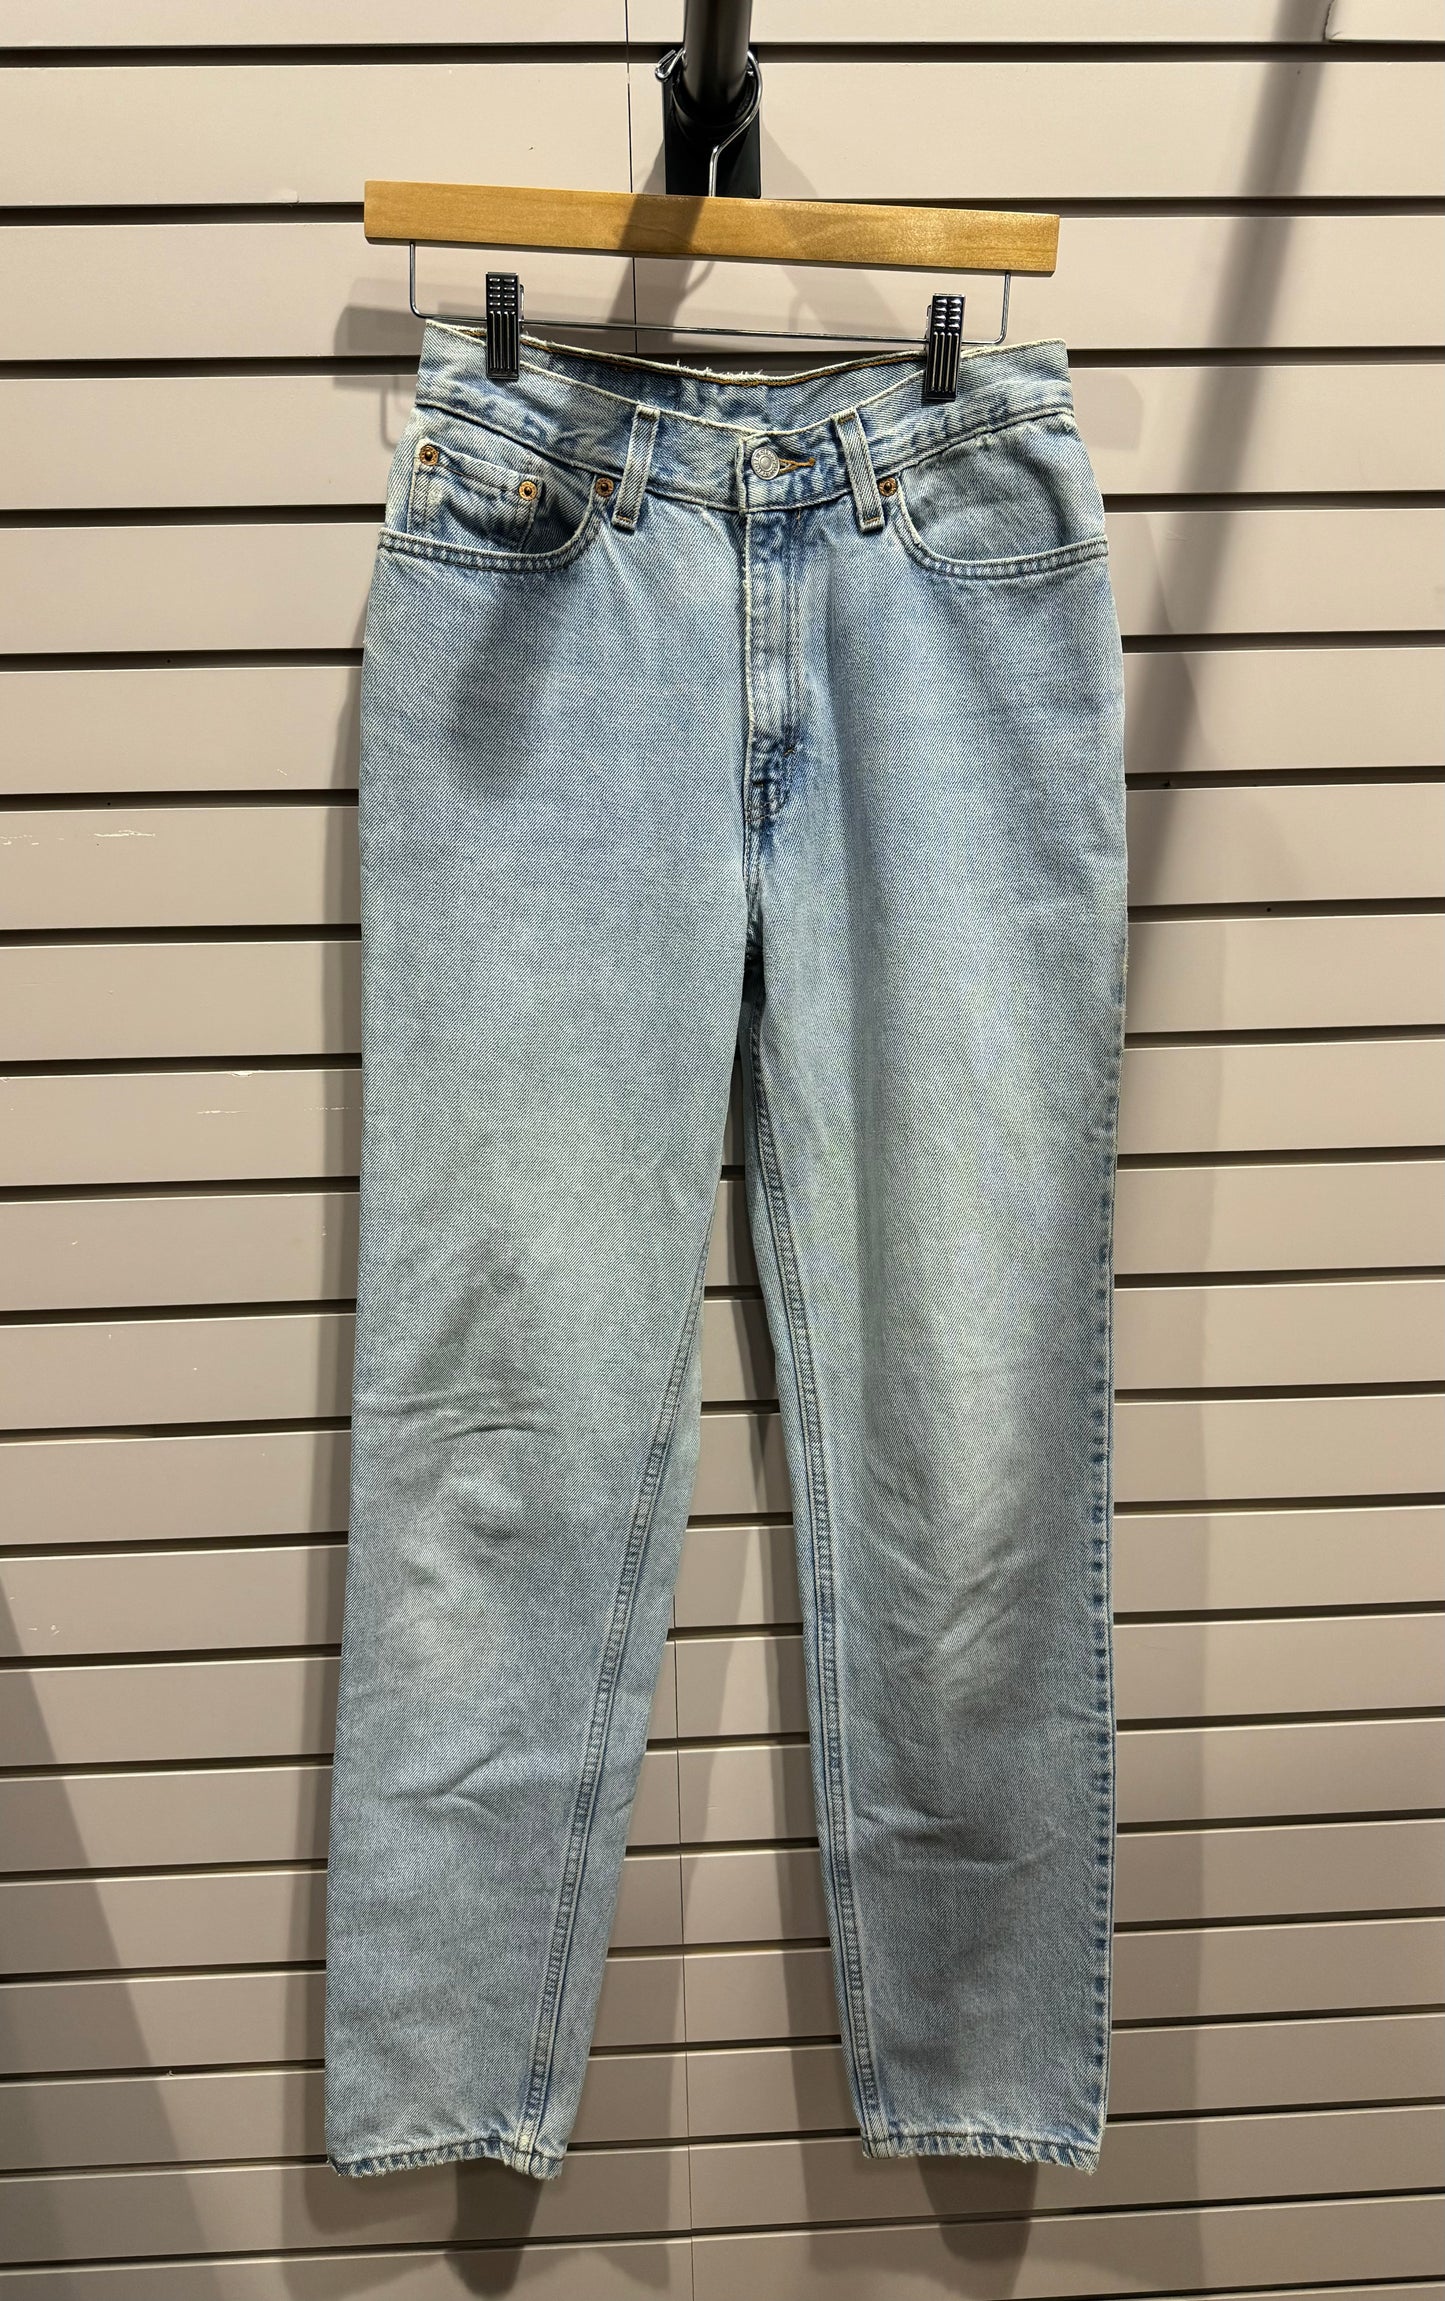 Vintage Levi's Jeans - Storm and Sky Shoppe